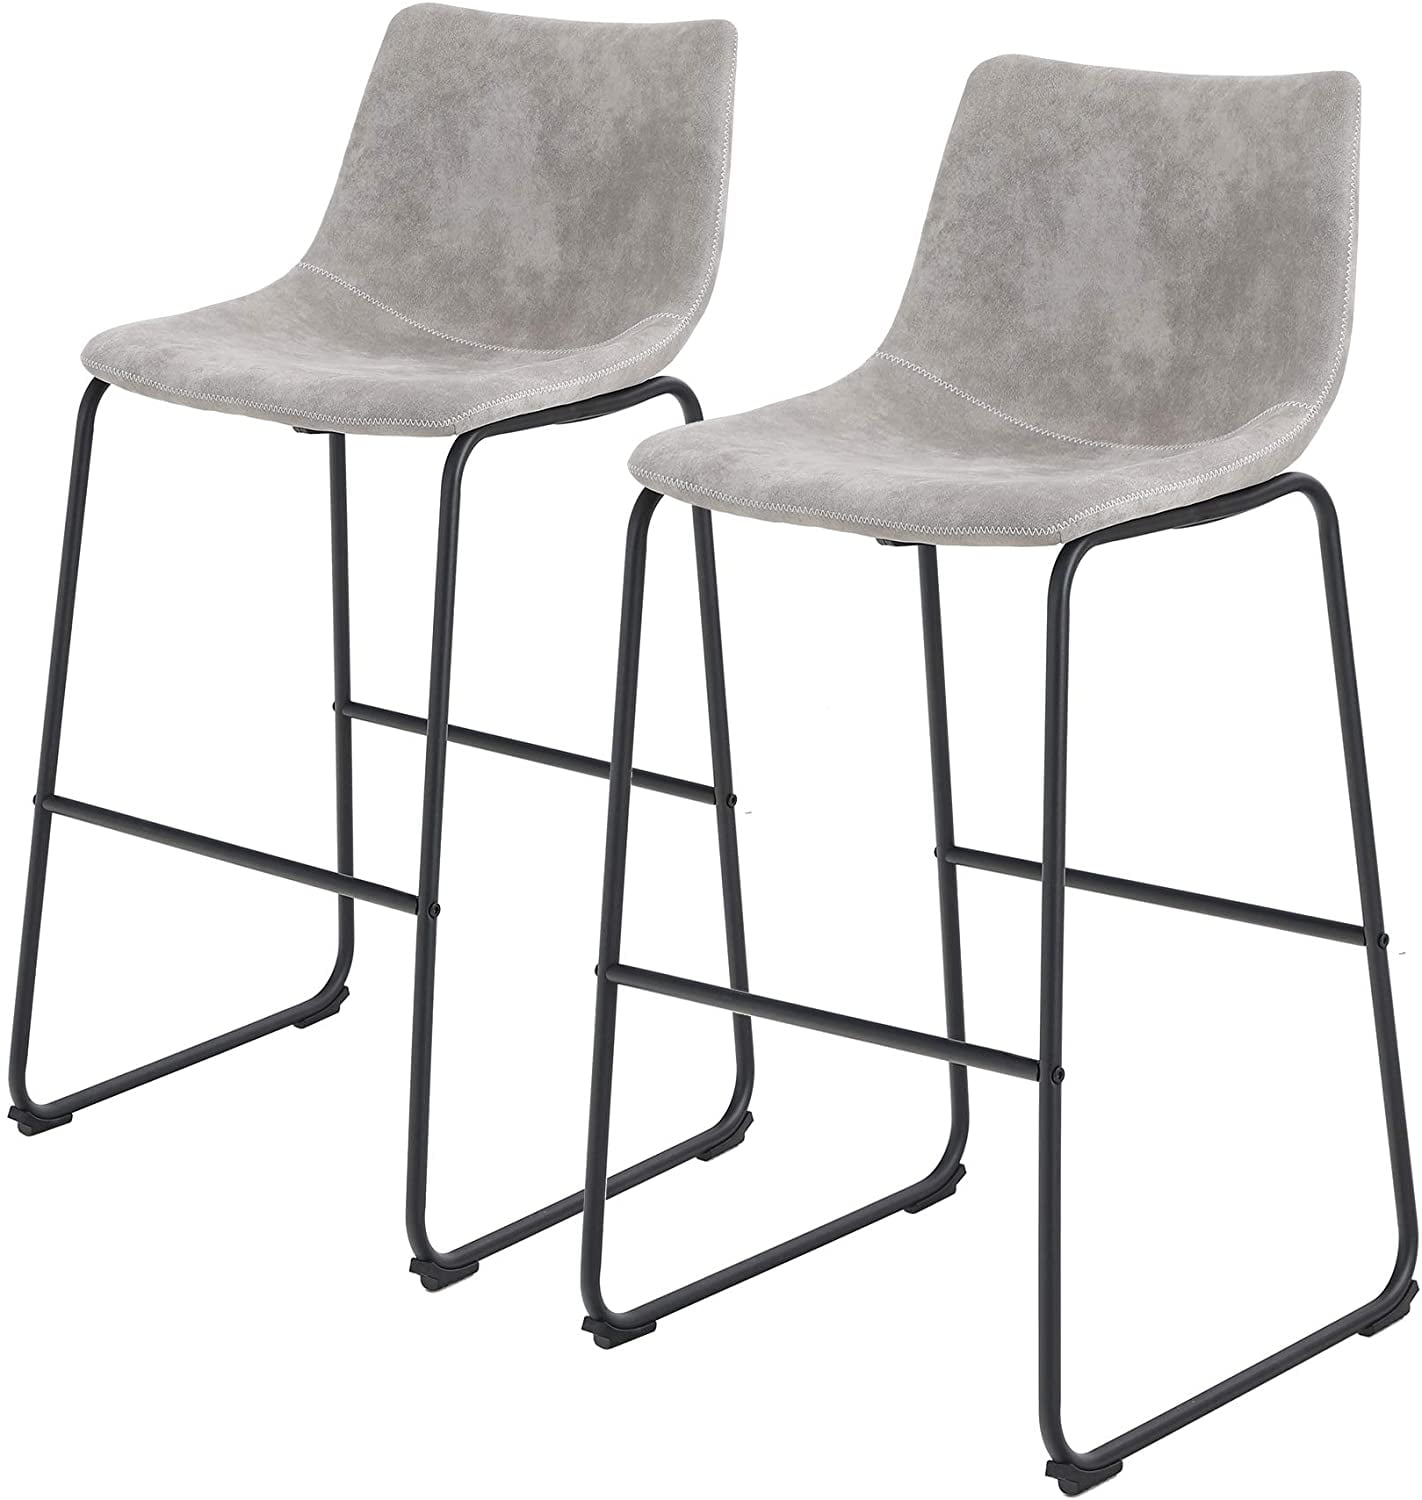 Mf Studio 2pcs 30 Bar Stools Chair, Vintage Counter Height Bar Stools